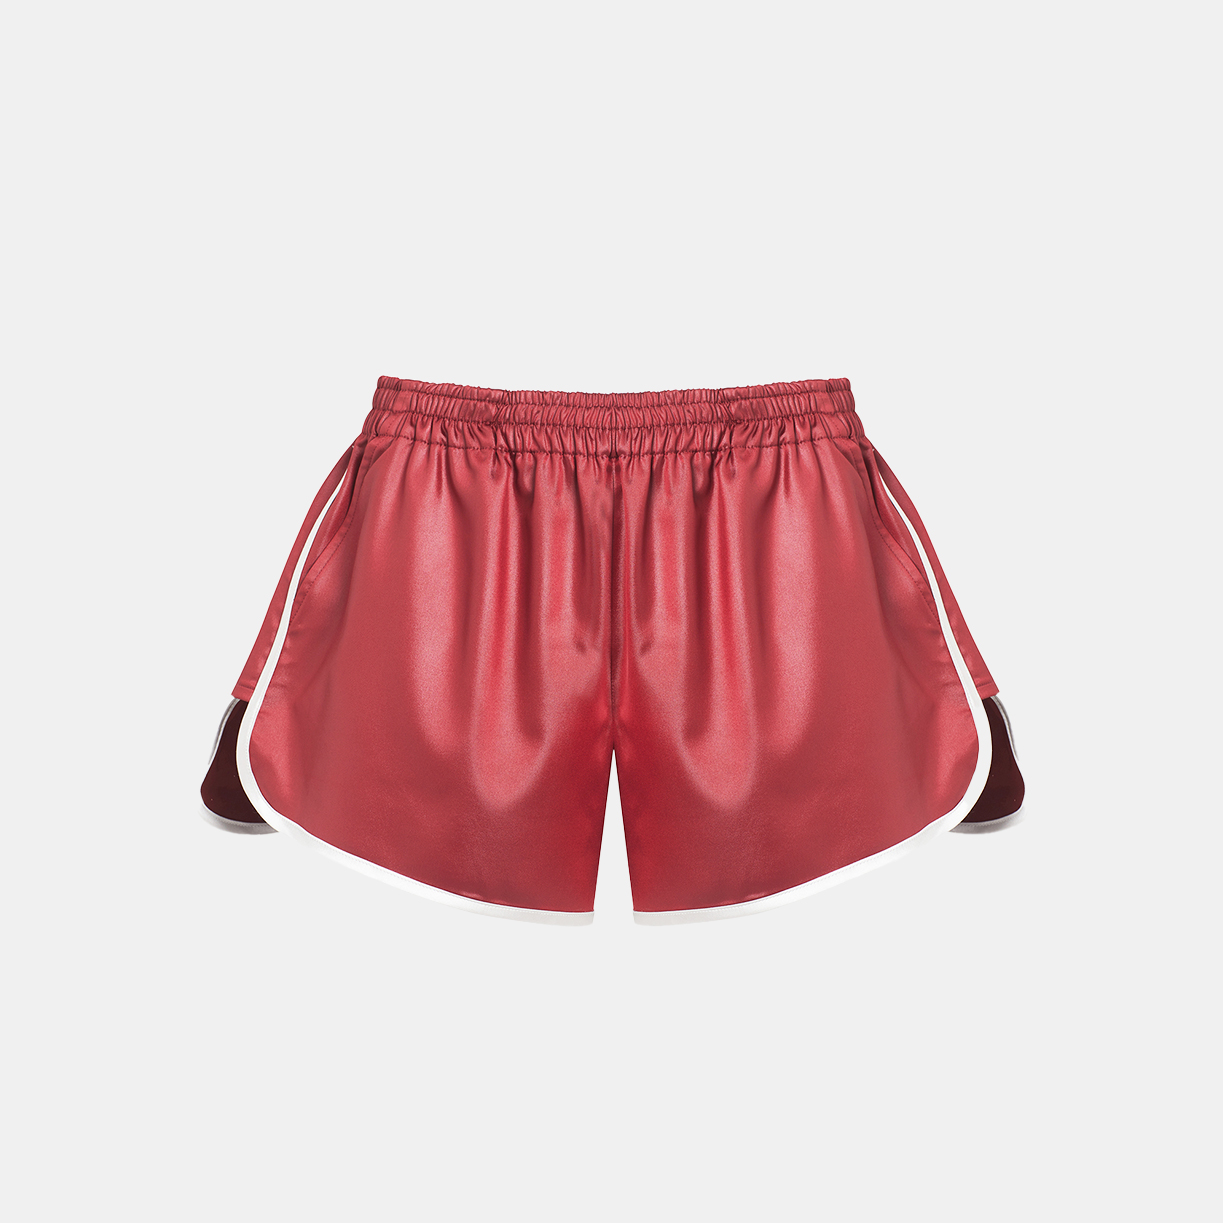 Mango Selection red athletic shorts